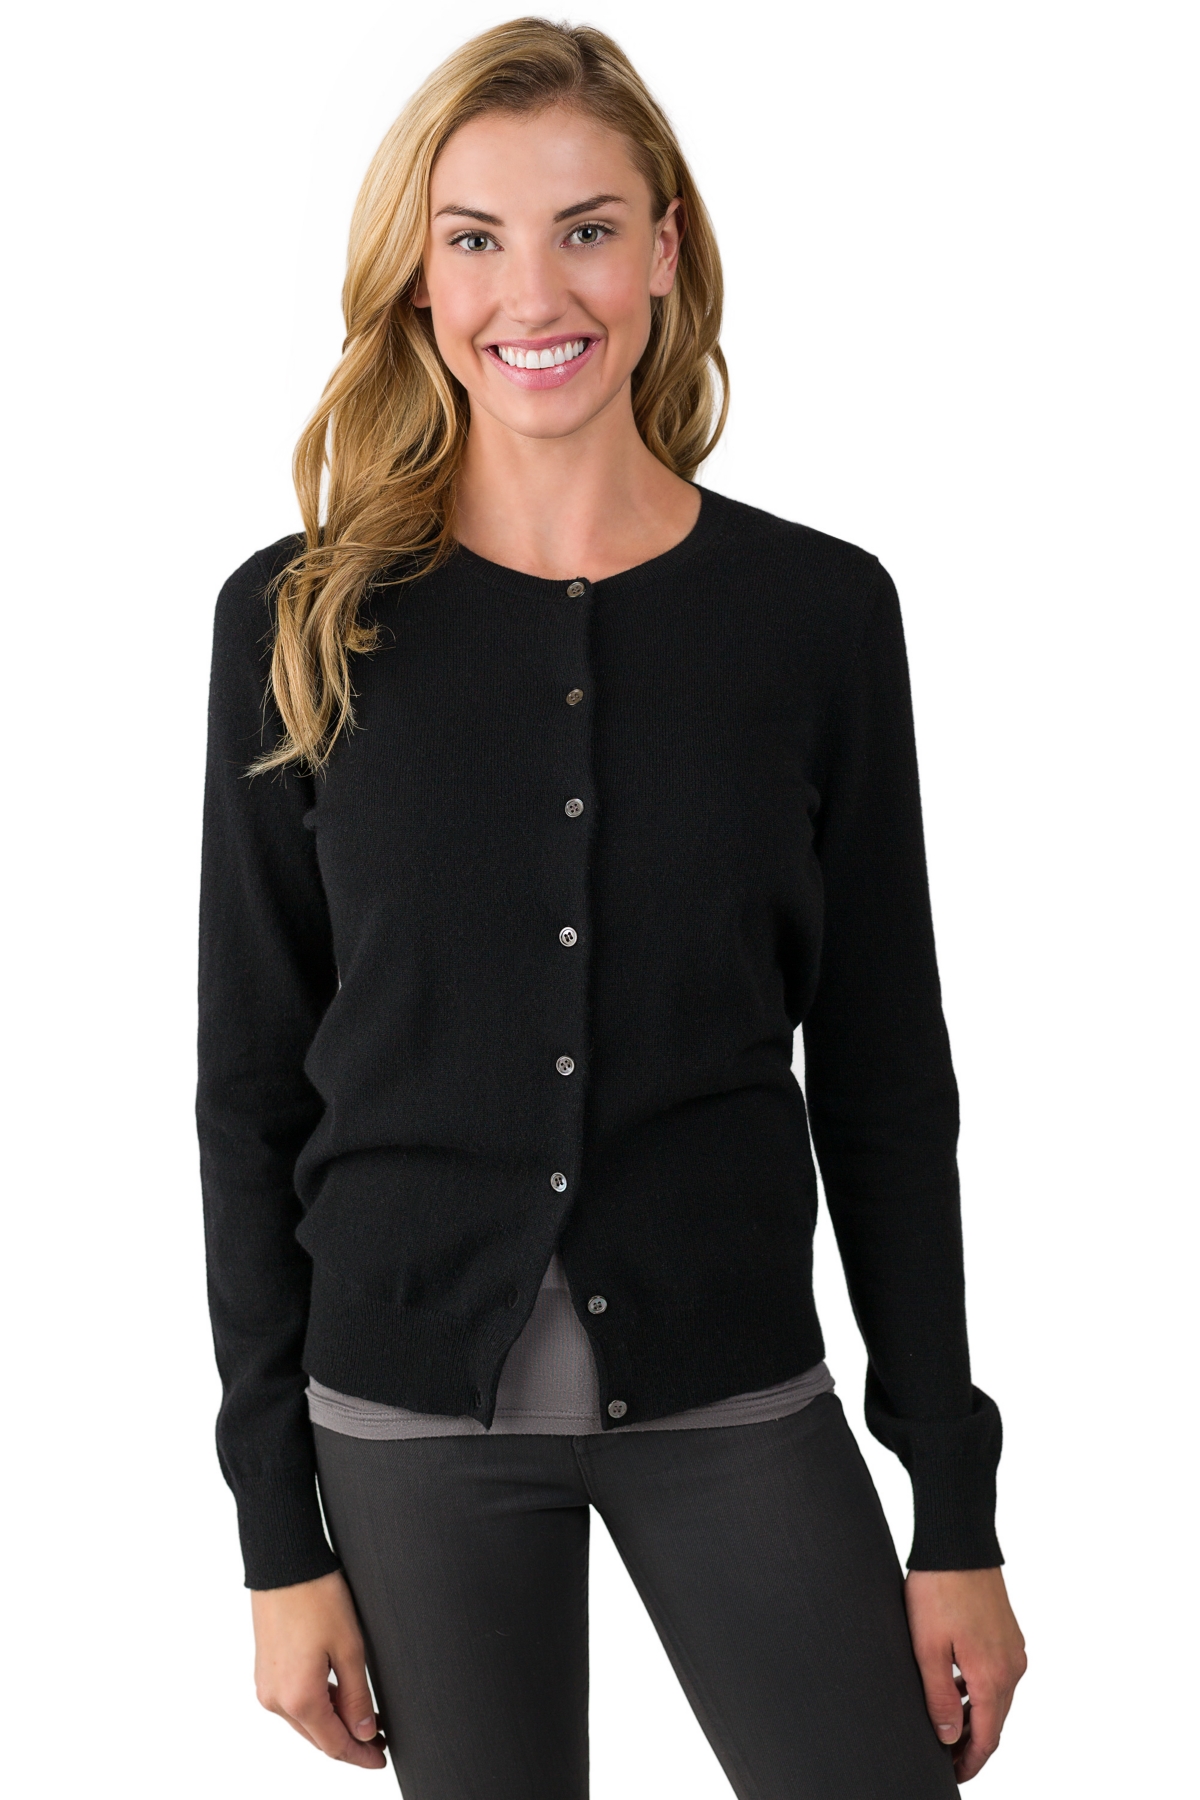 Women's 100% Cashmere Button Front Long Sleeve Crewneck Cardigan Sweater (1575, Lime, Large ) - Cobalt